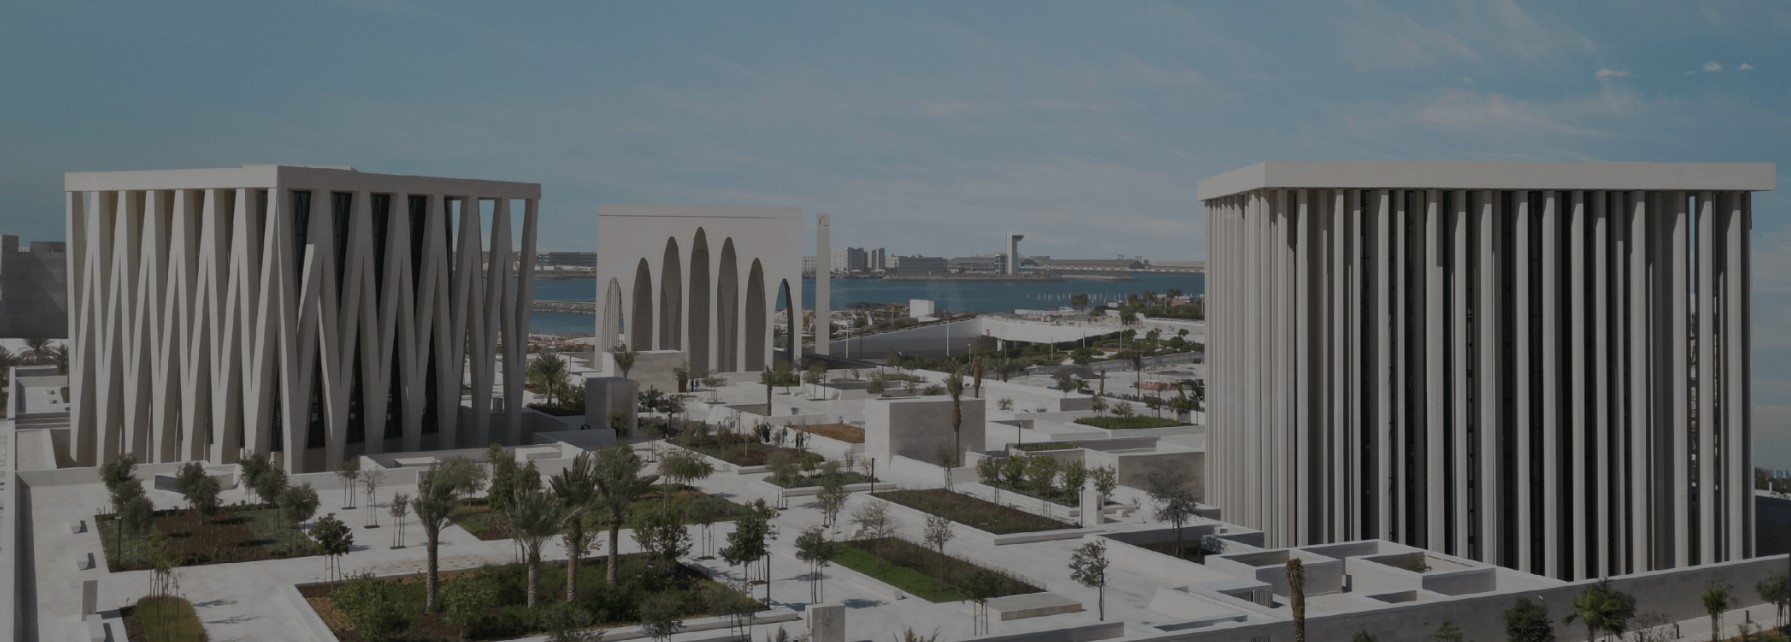 Abrahamic Family House Abu Dhabi. Tres religiones unidas por la paz